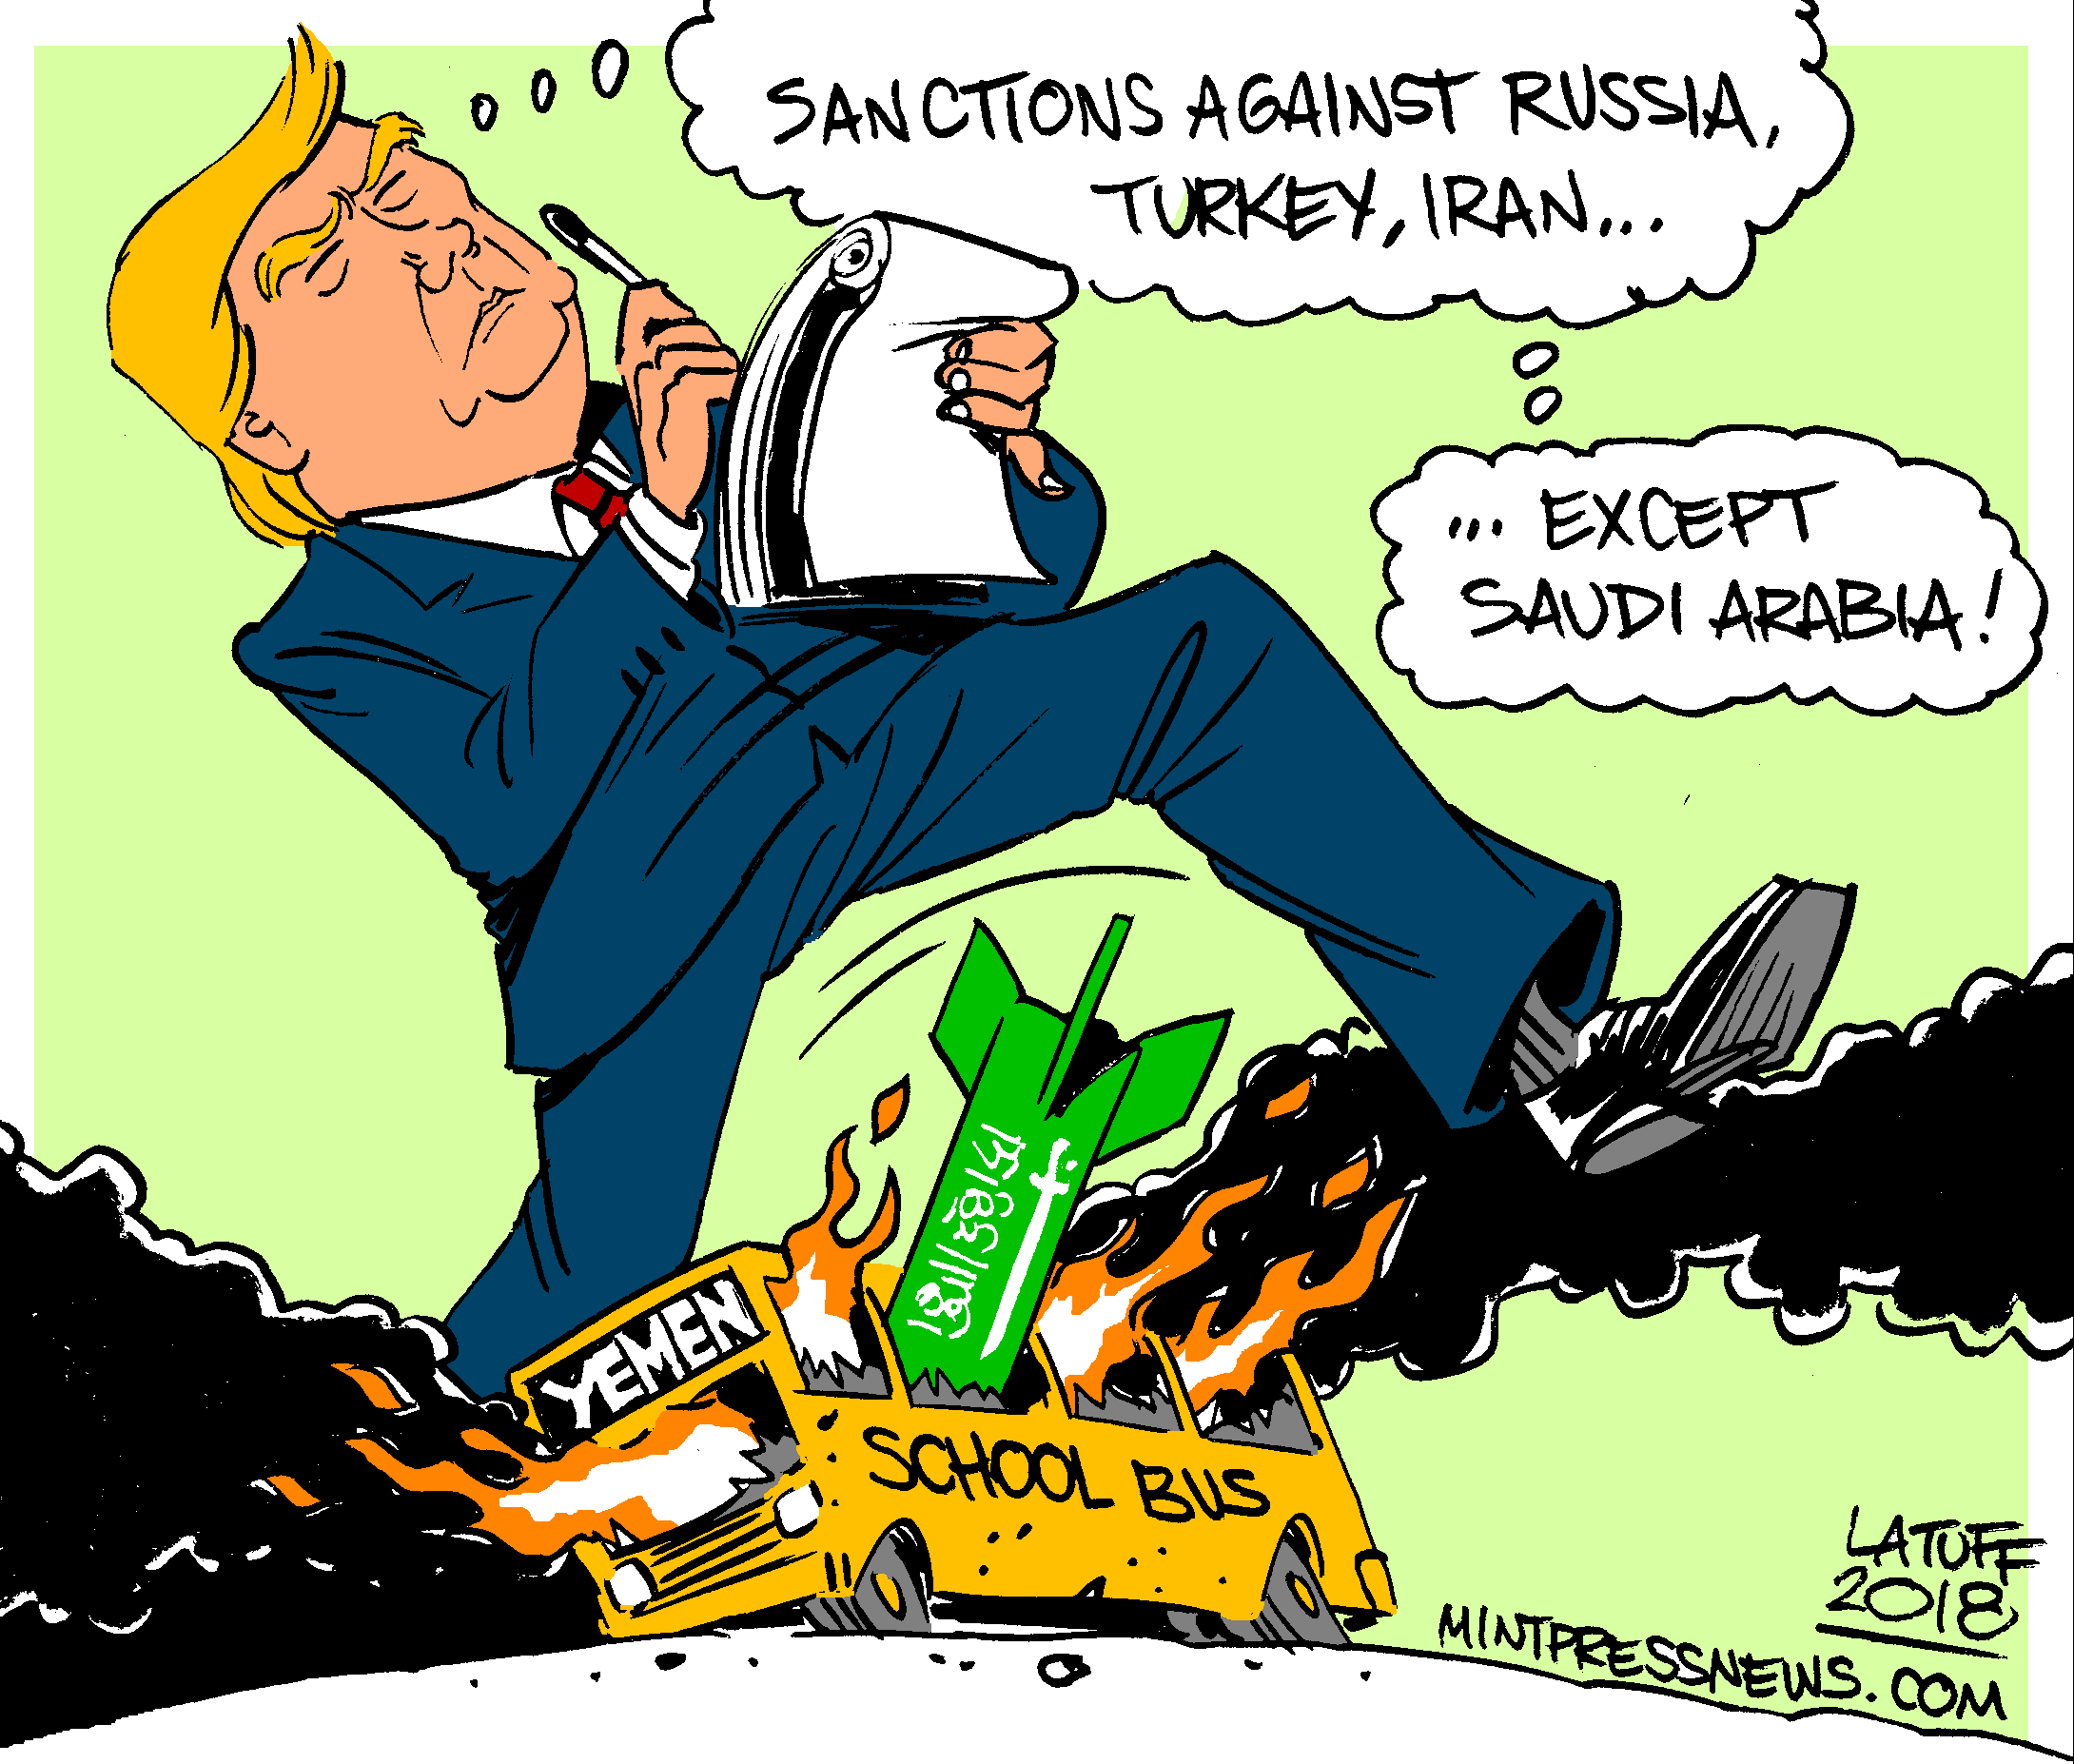 The United States Sanctions Everyone, but Saudi Arabia.